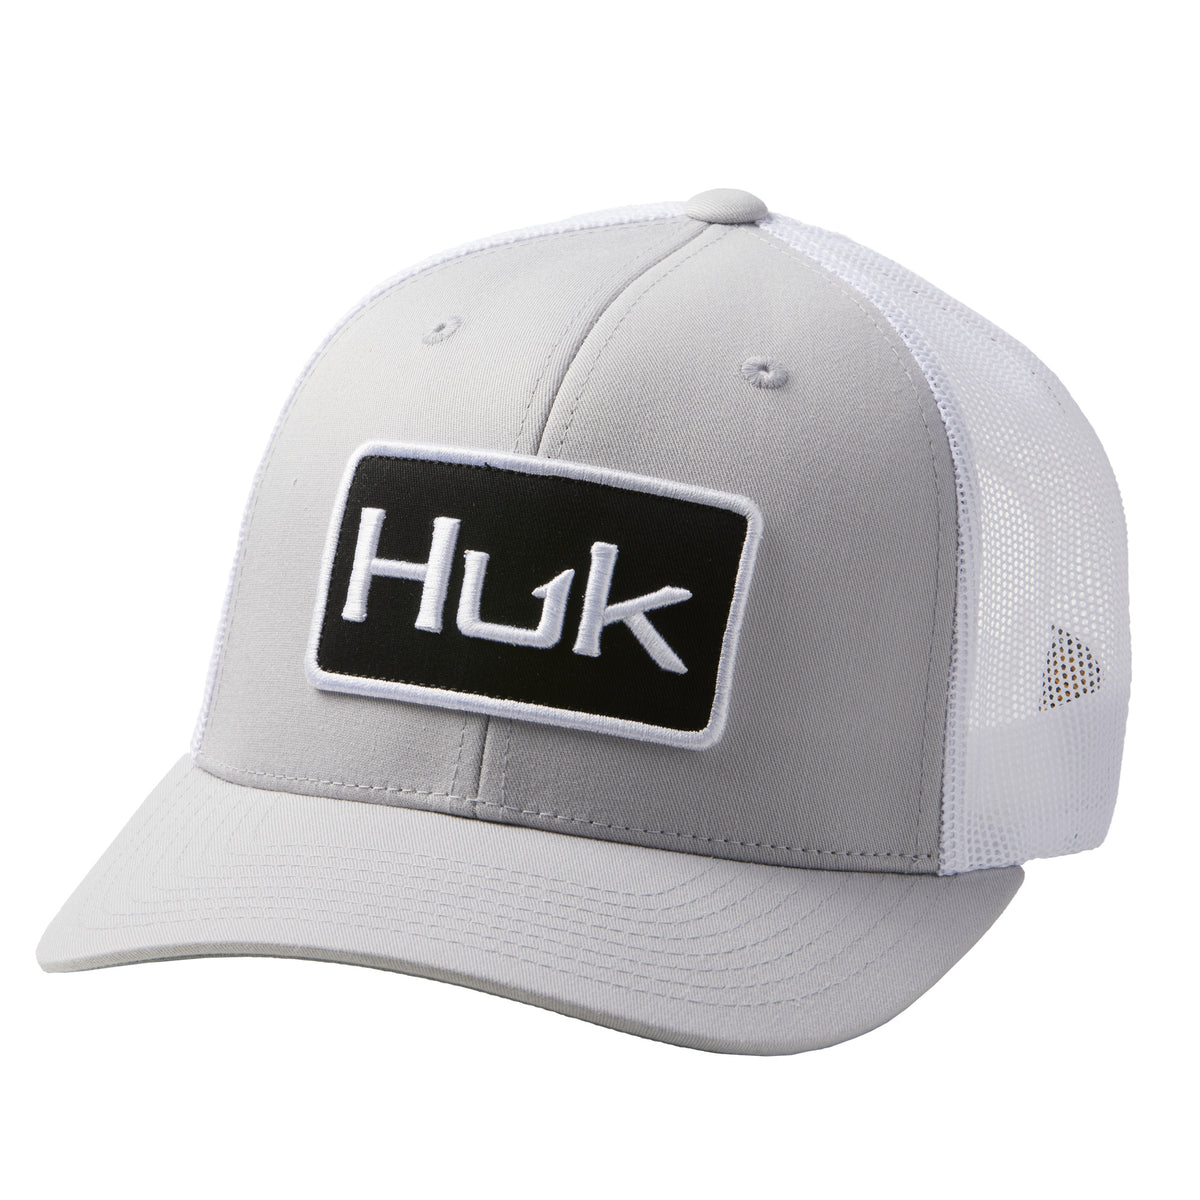 HUK Performance Fishing Huk Logo Trucker - Youth H7300044-413-1 ON